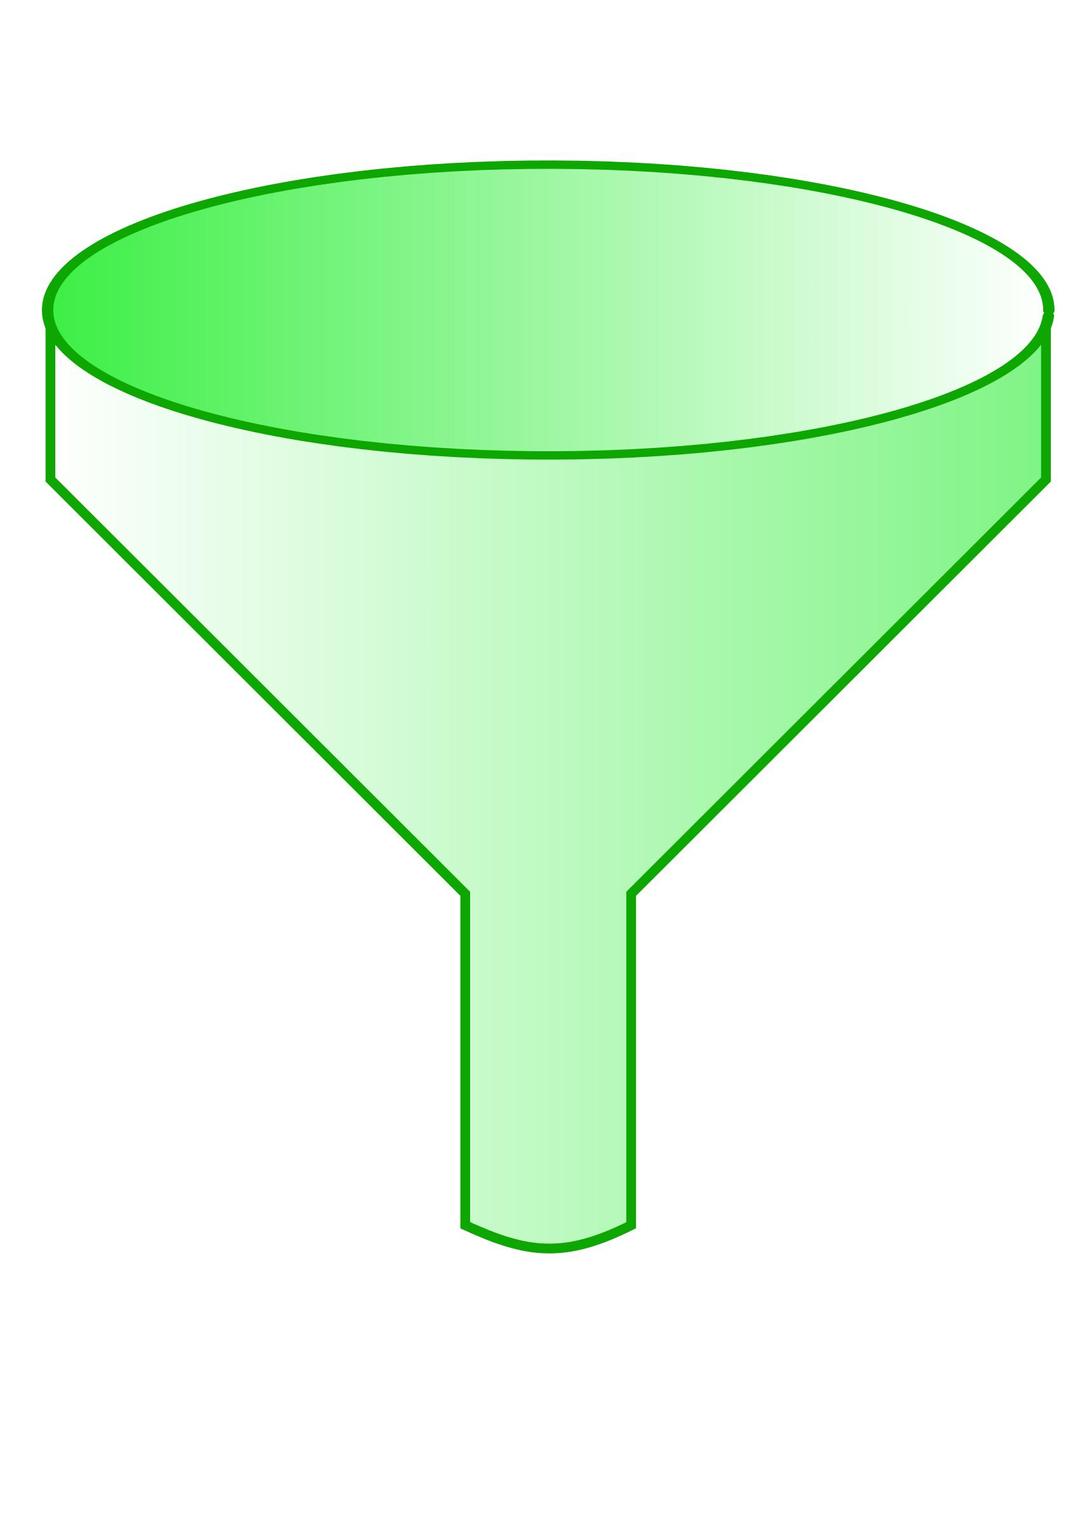 green funnel png transparent